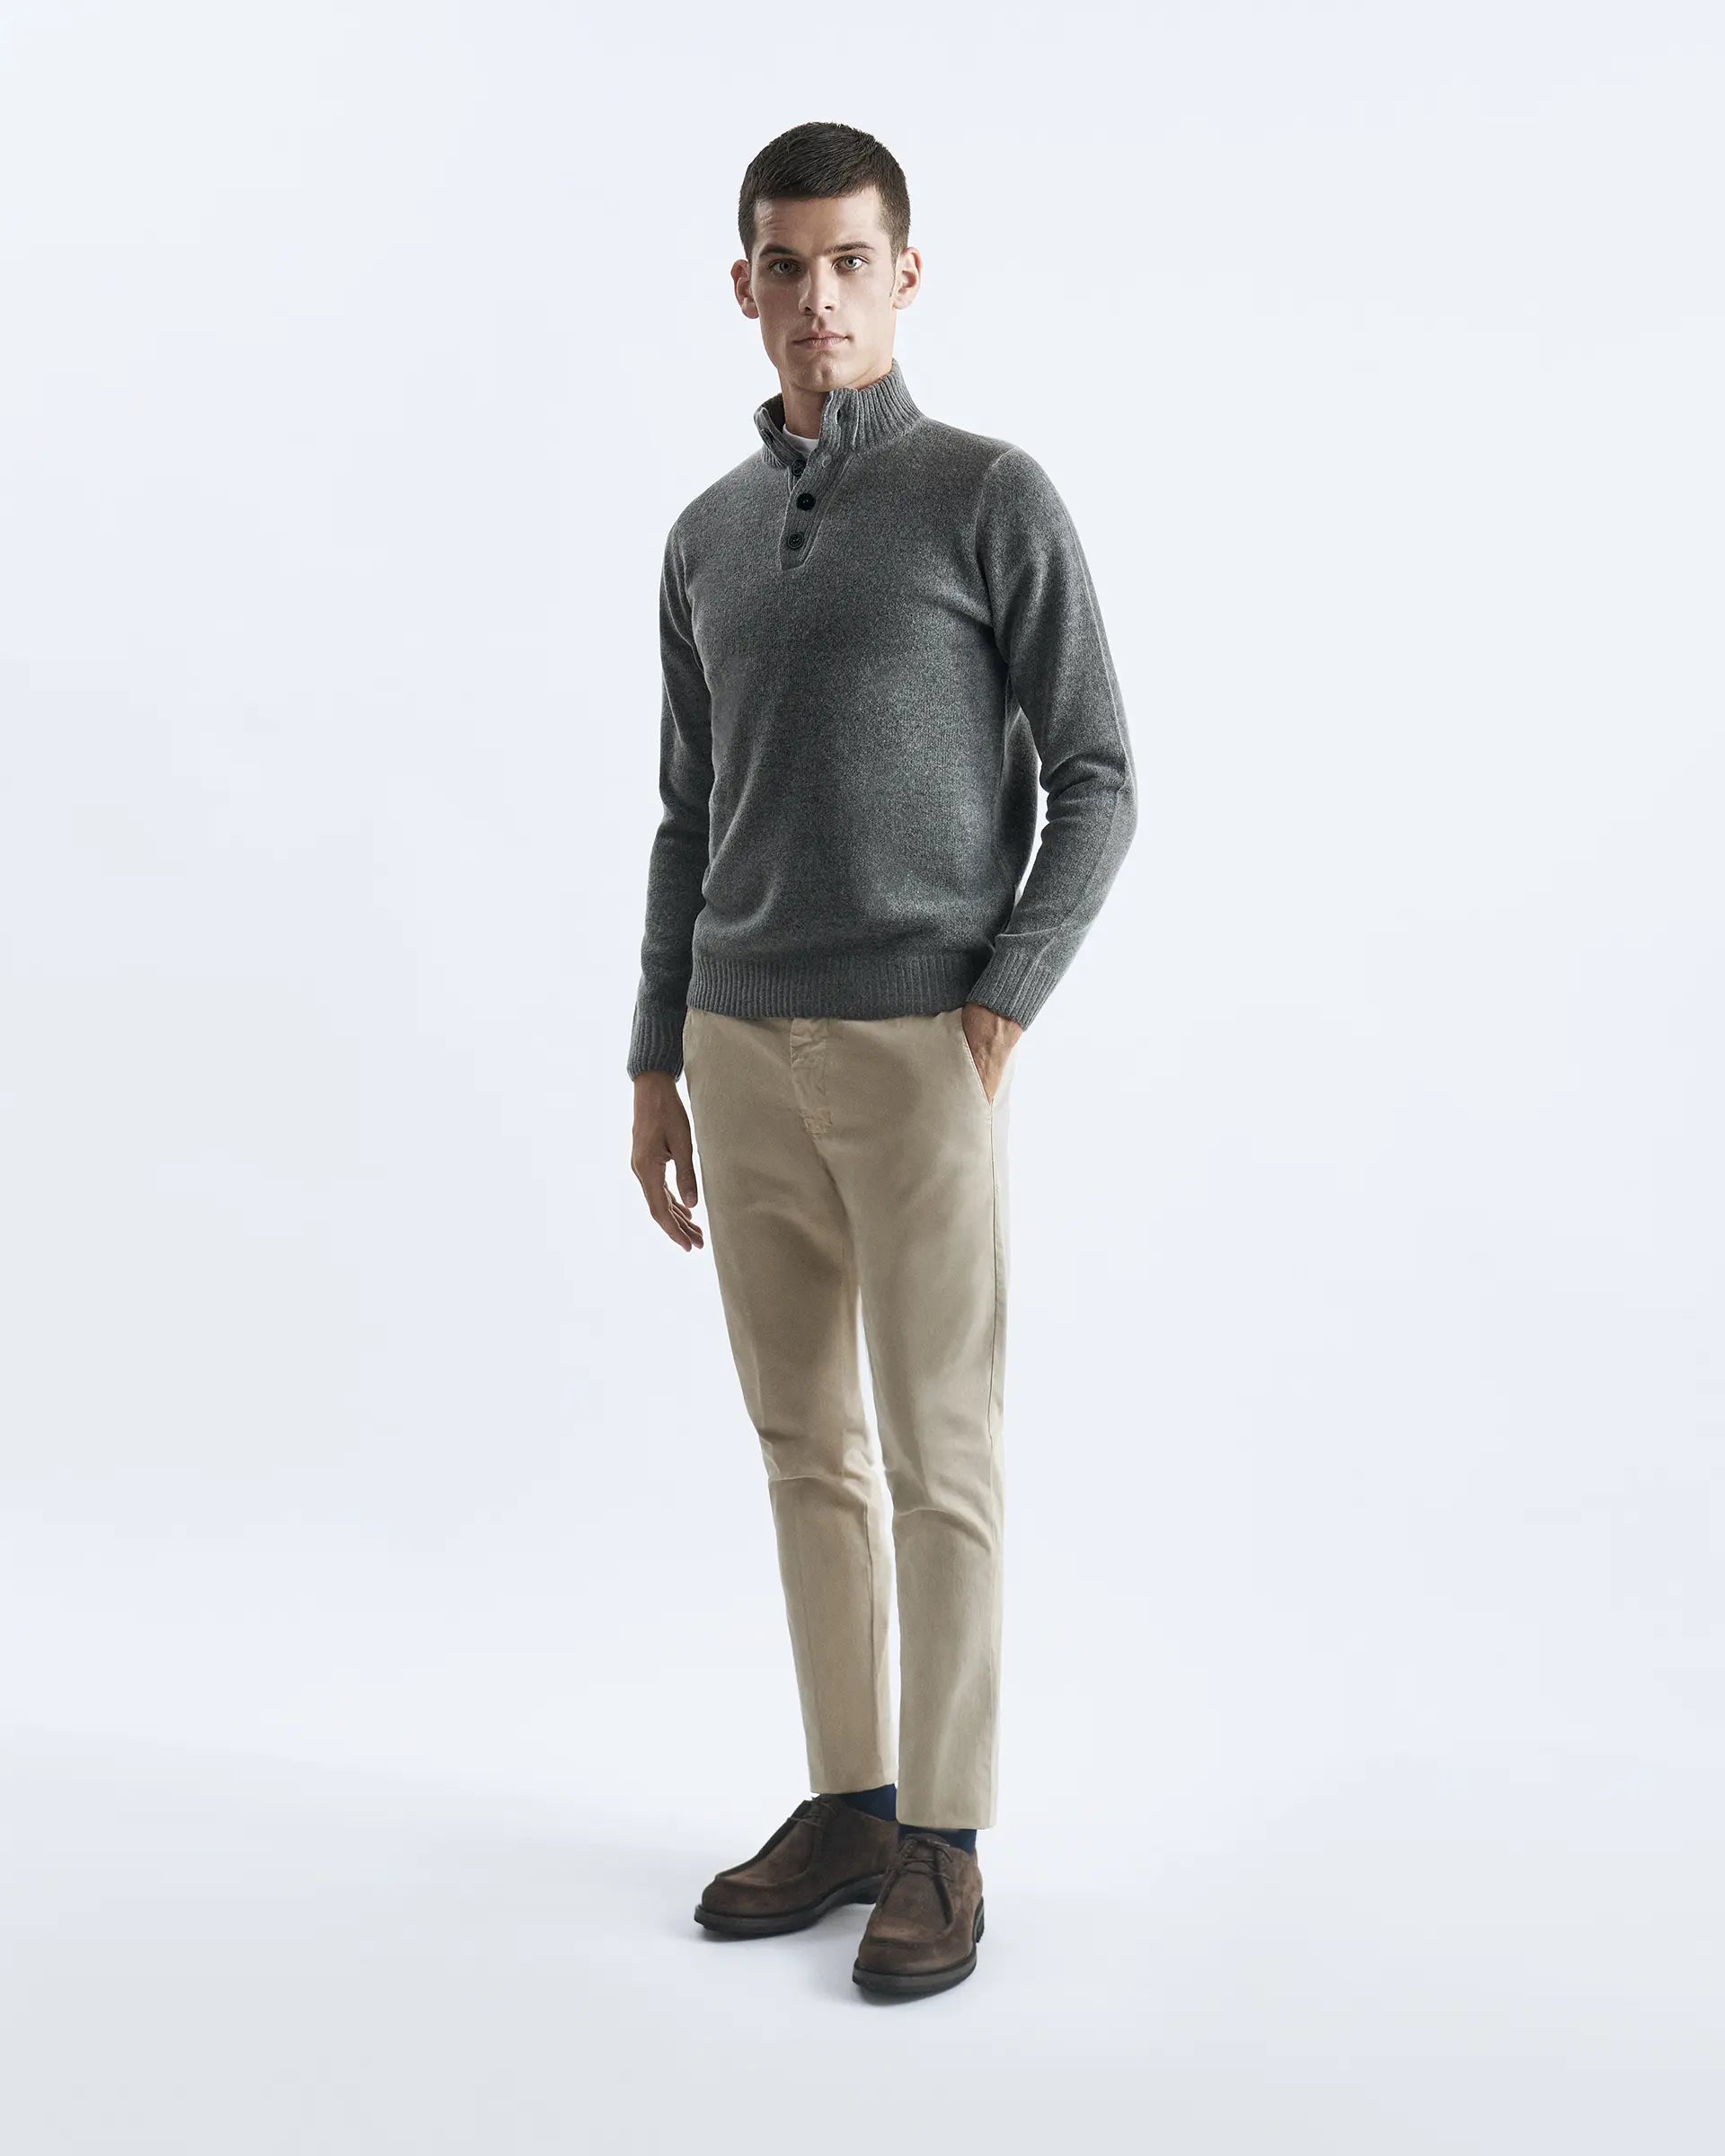 Charcoal Grey 4-Button Wool Blend Sweater - 7 Gauge